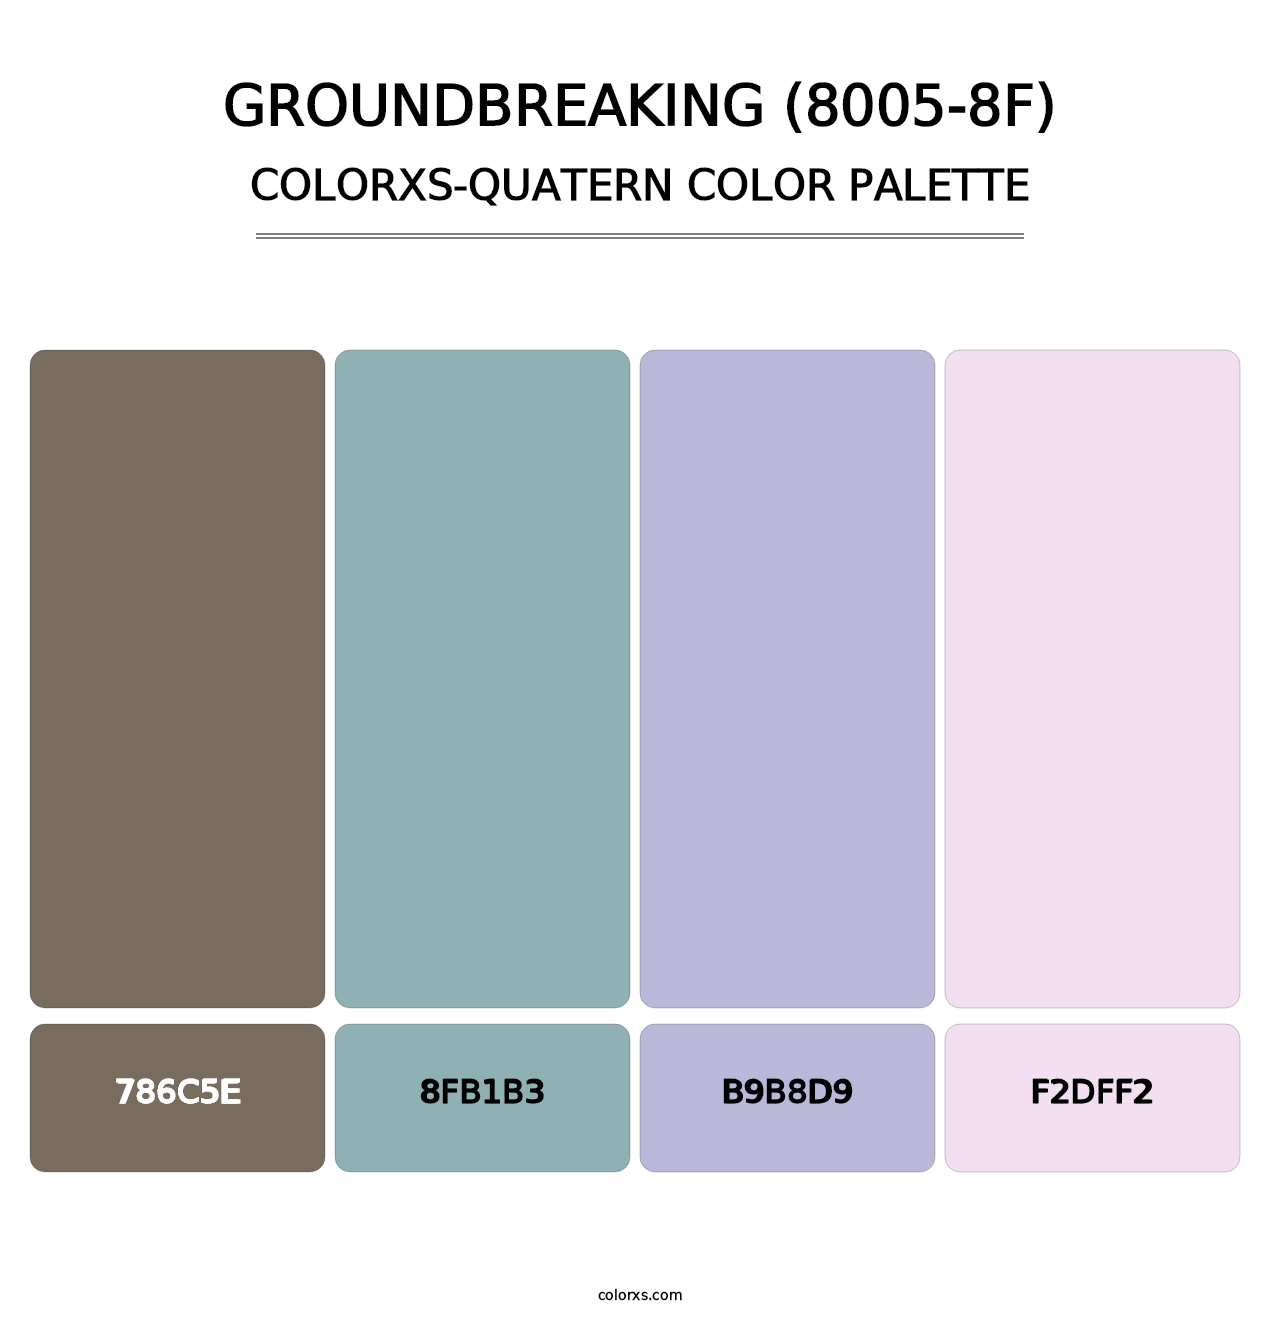 Groundbreaking (8005-8F) - Colorxs Quatern Palette